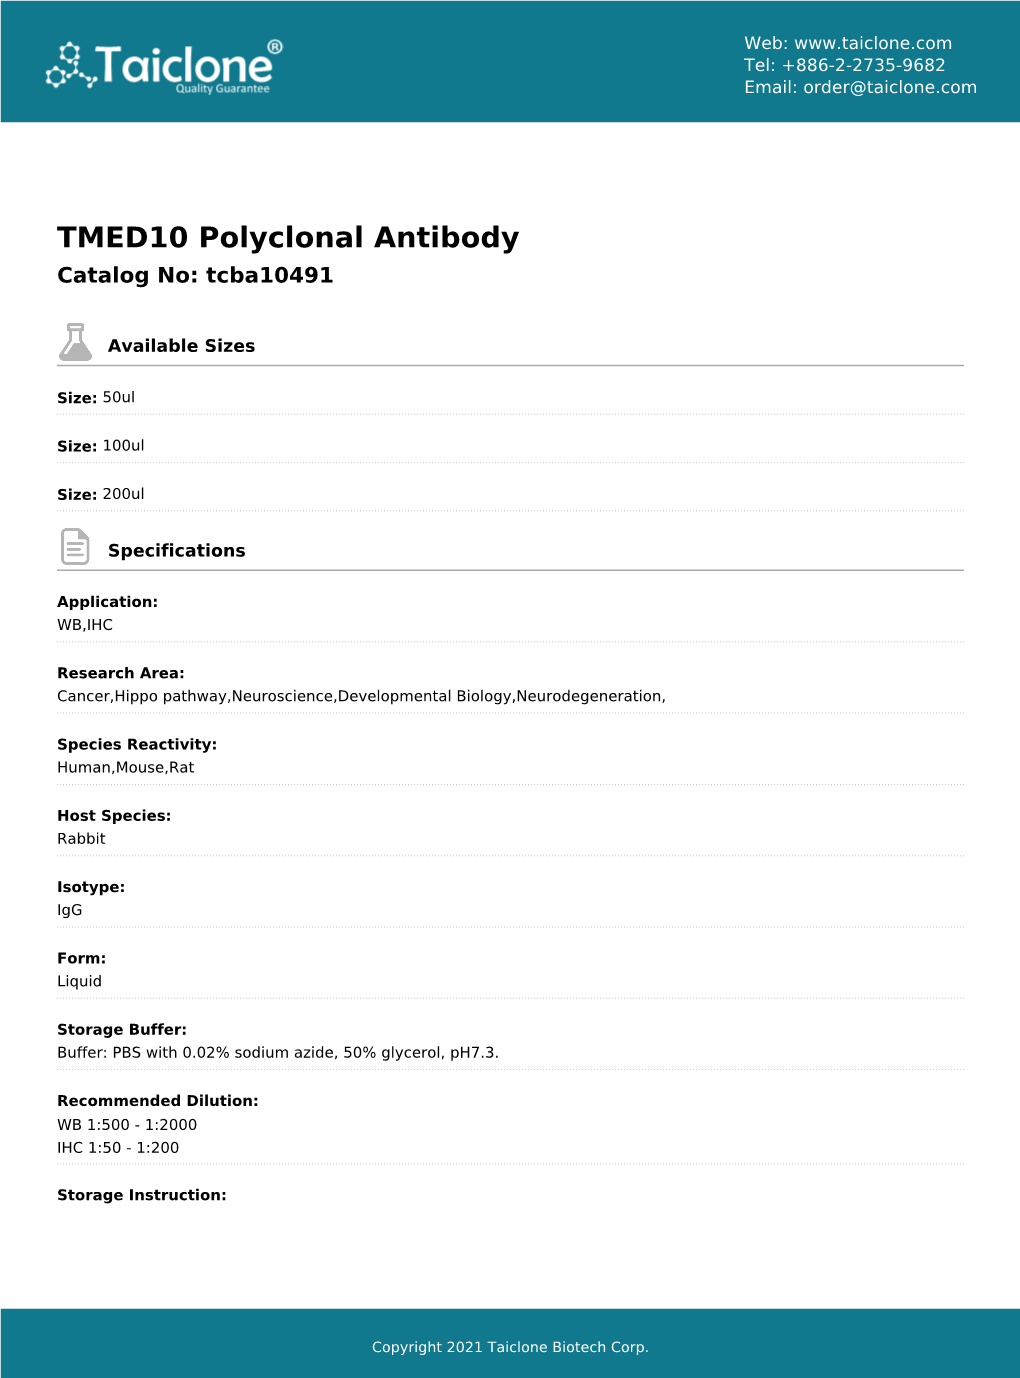 TMED10 Polyclonal Antibody Catalog No: Tcba10491